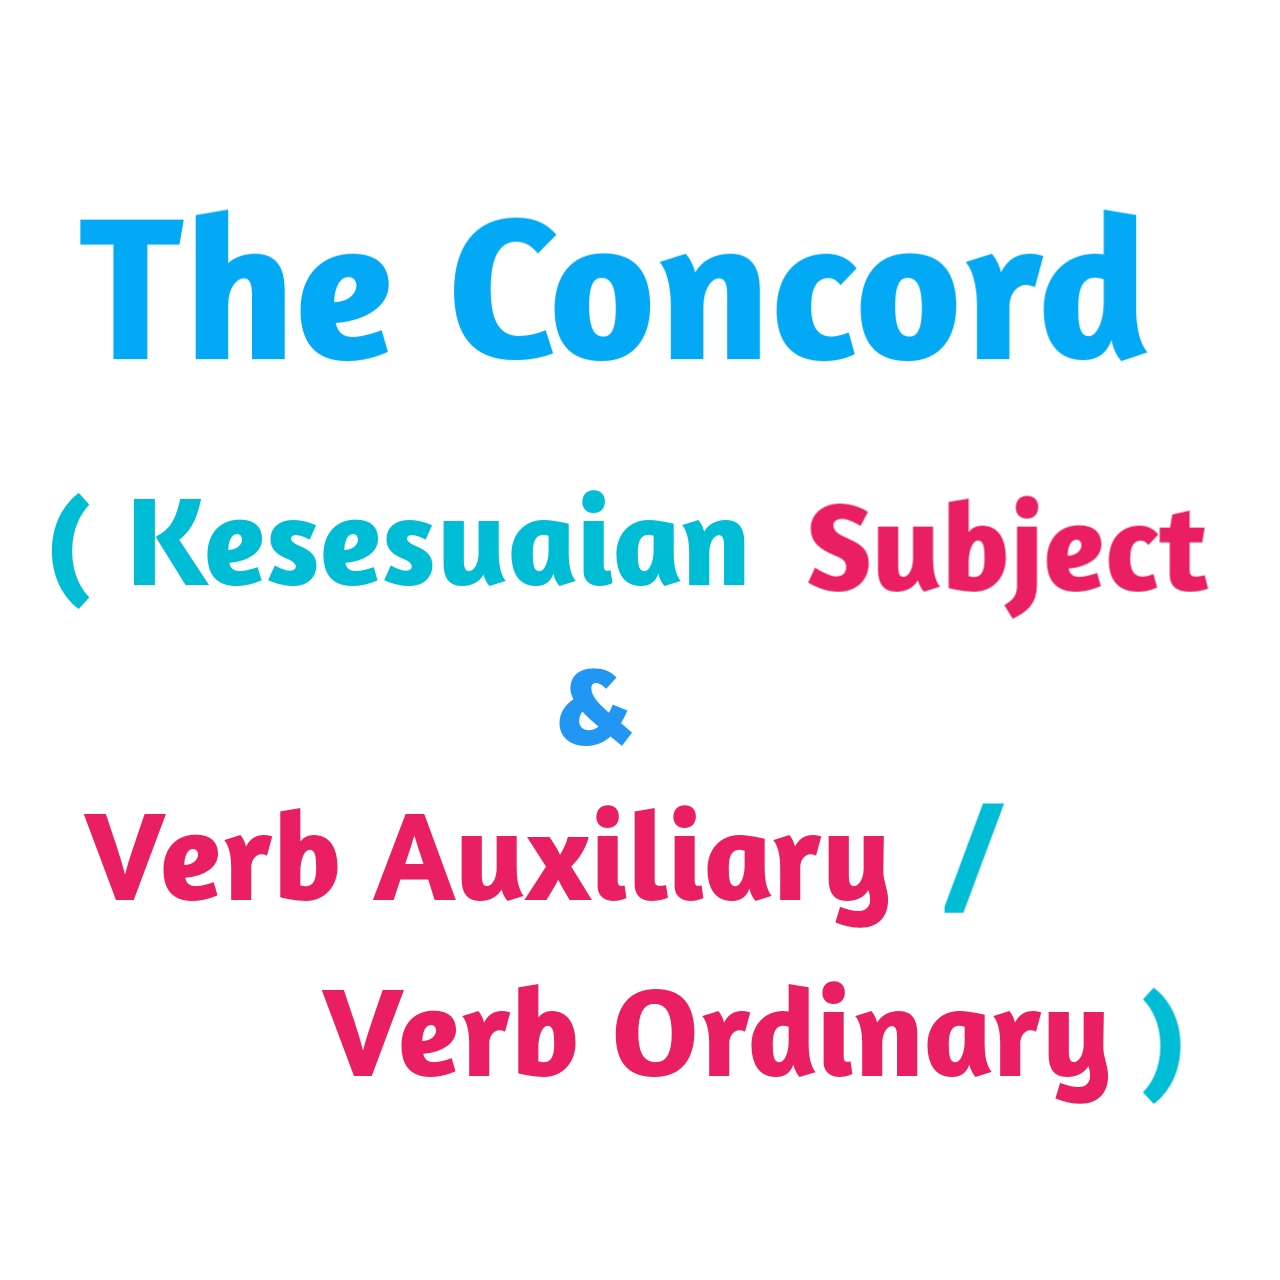 the-concord-kesesuaian-subject-dan-verb-auxiliary-atau-ordinary-dunia-bahasa-inggris